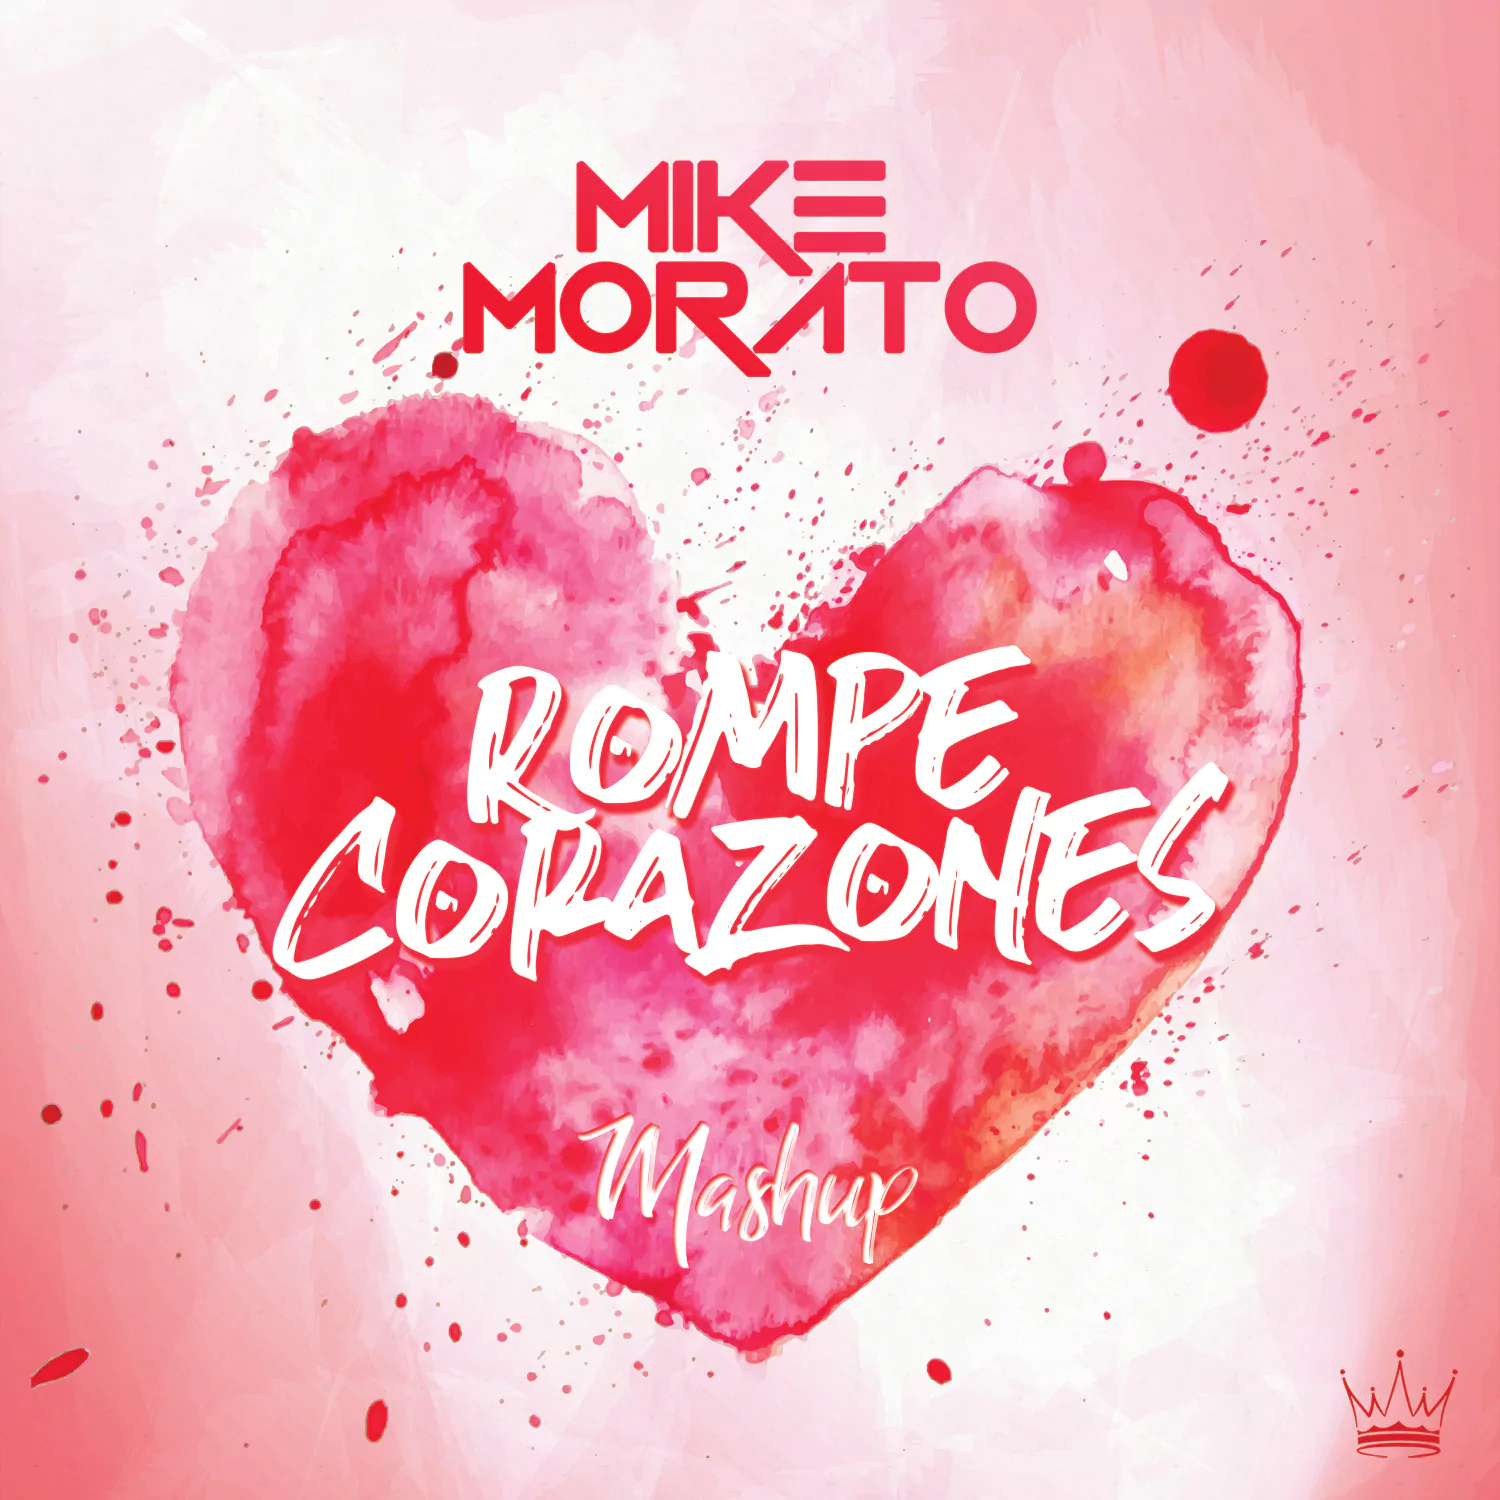 Mike Morato - Rompecorazones (Mashup)